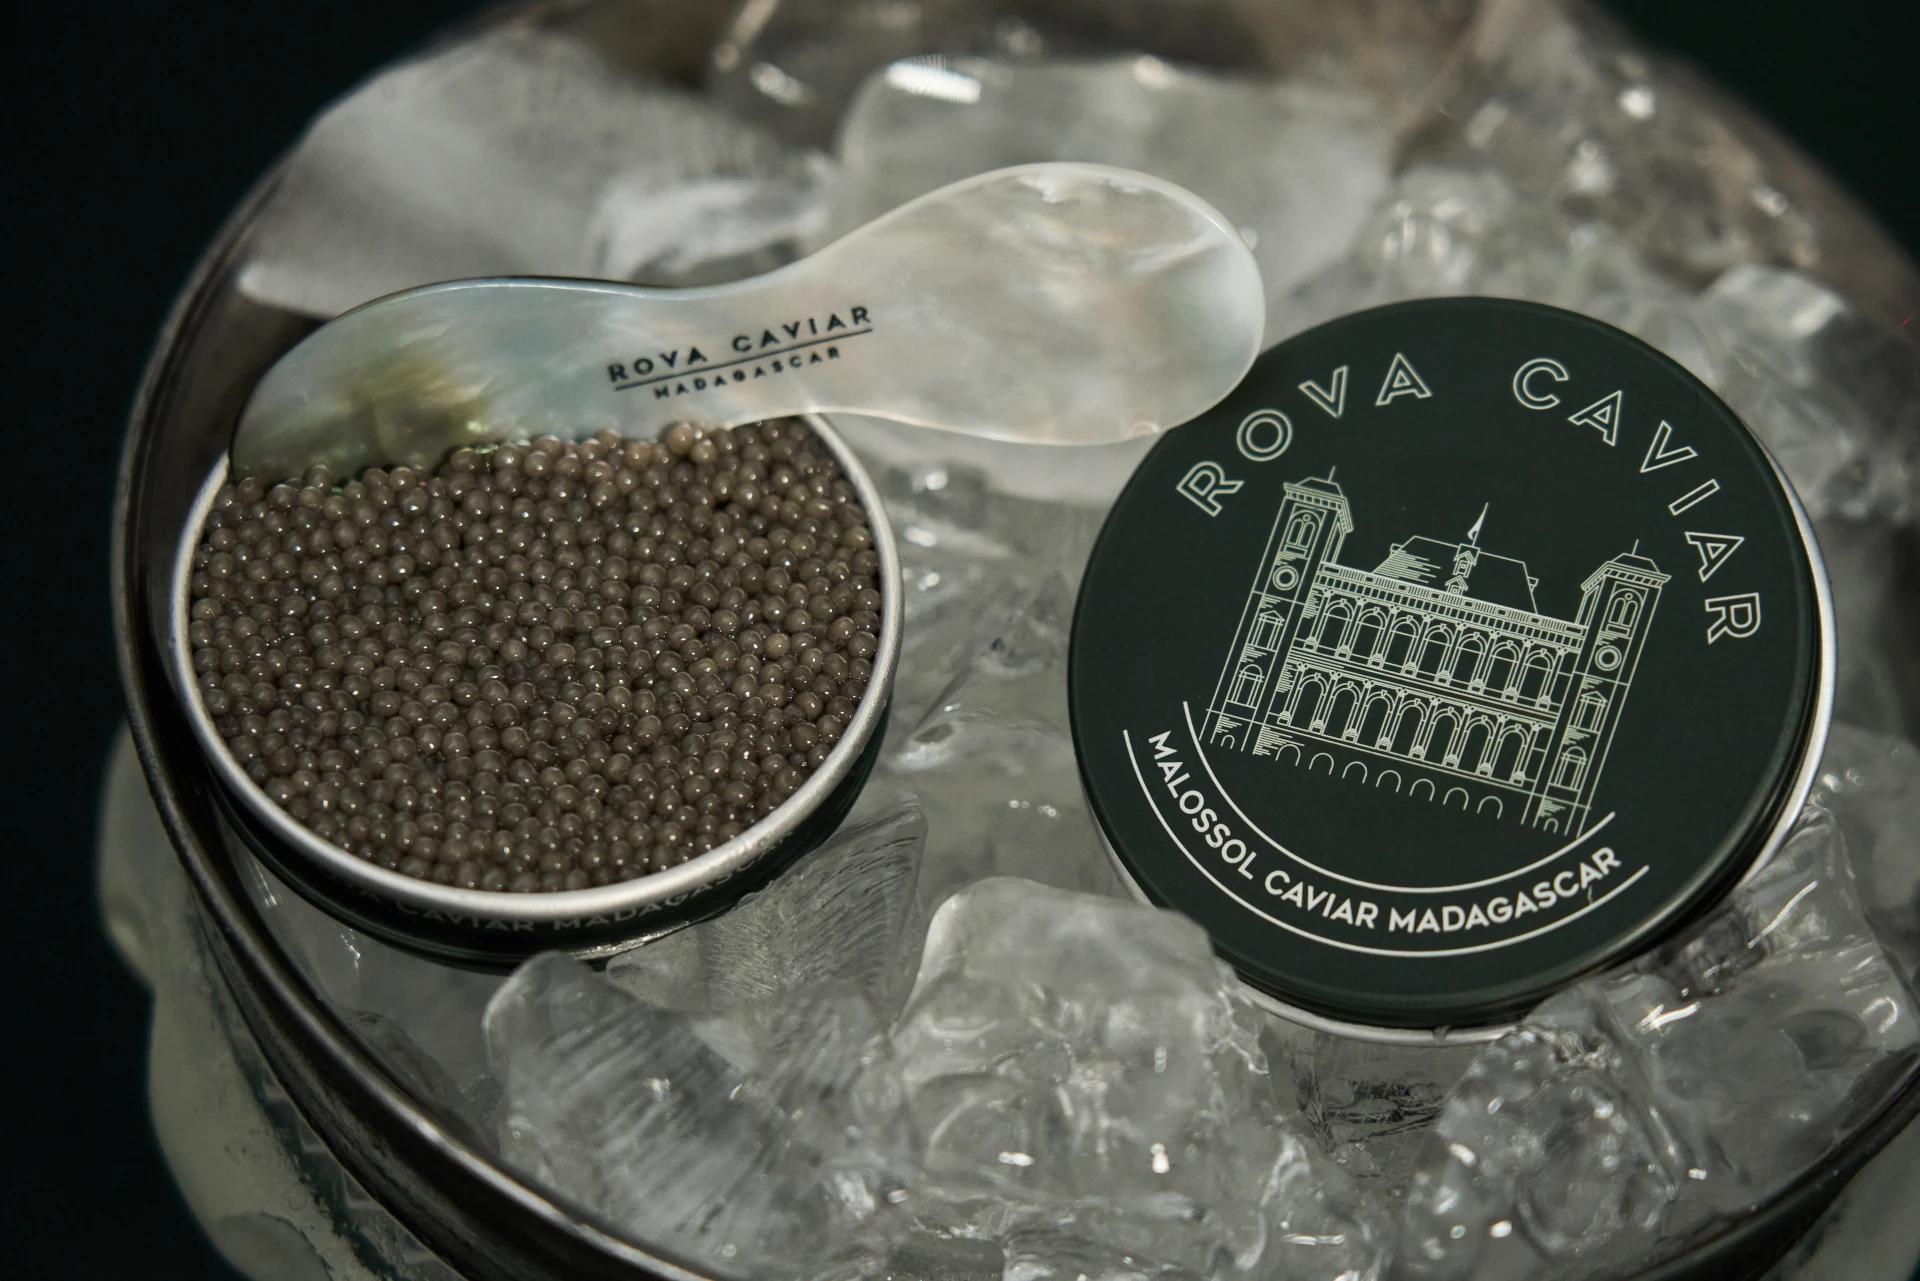 Open Shipova Caviar Box with lid and tasting spoon